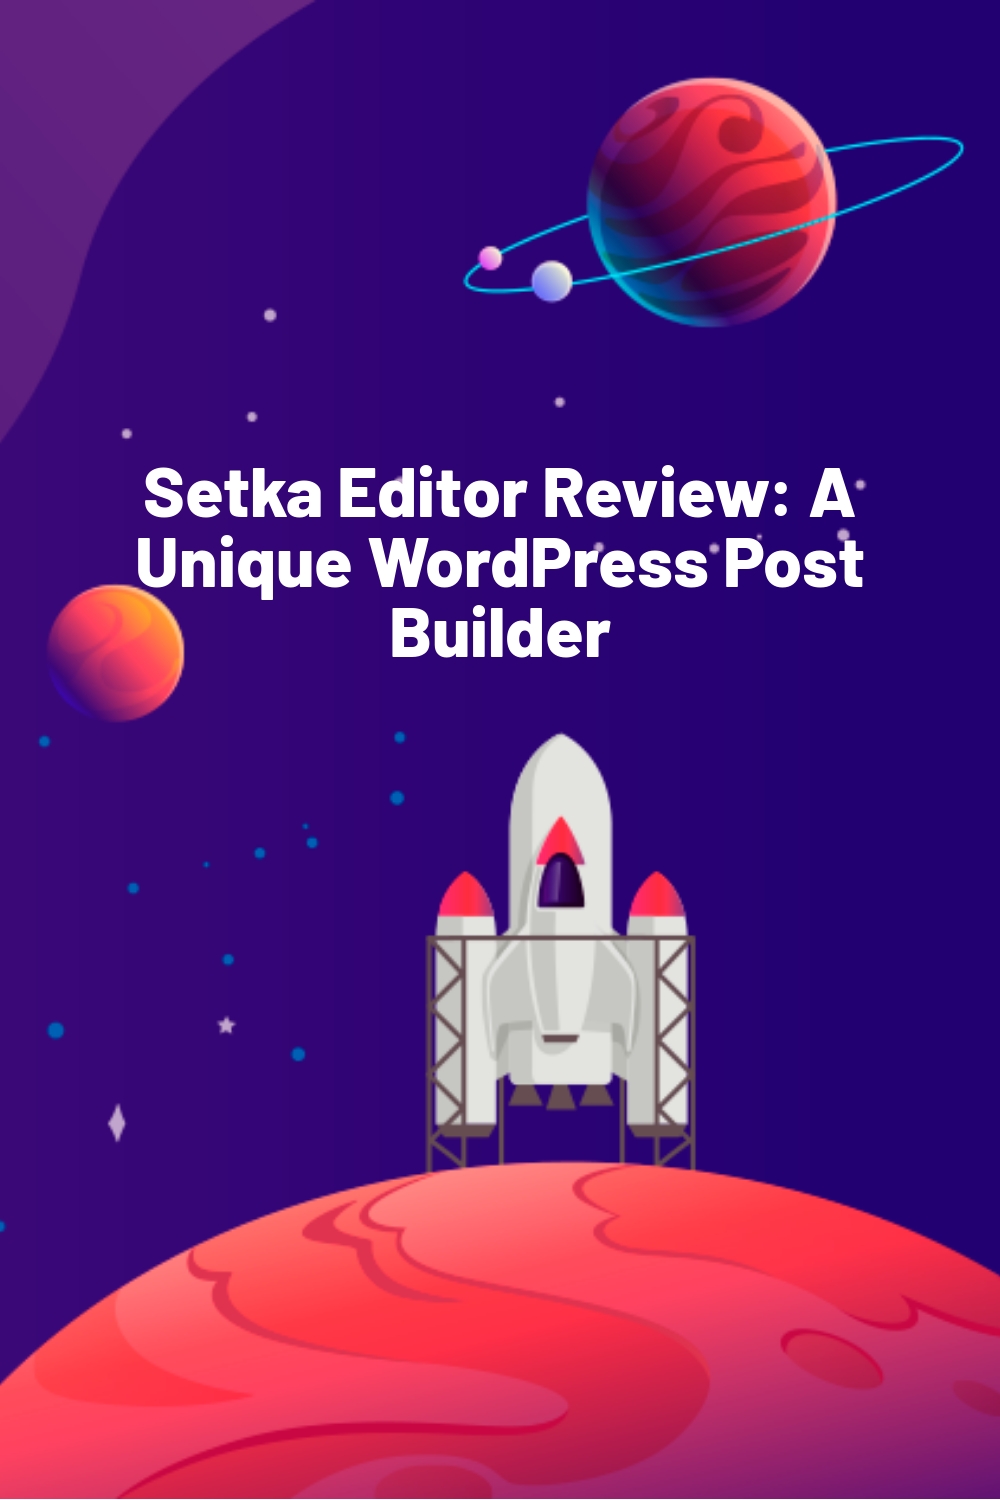 Setka Editor Review: A Unique WordPress Post Builder